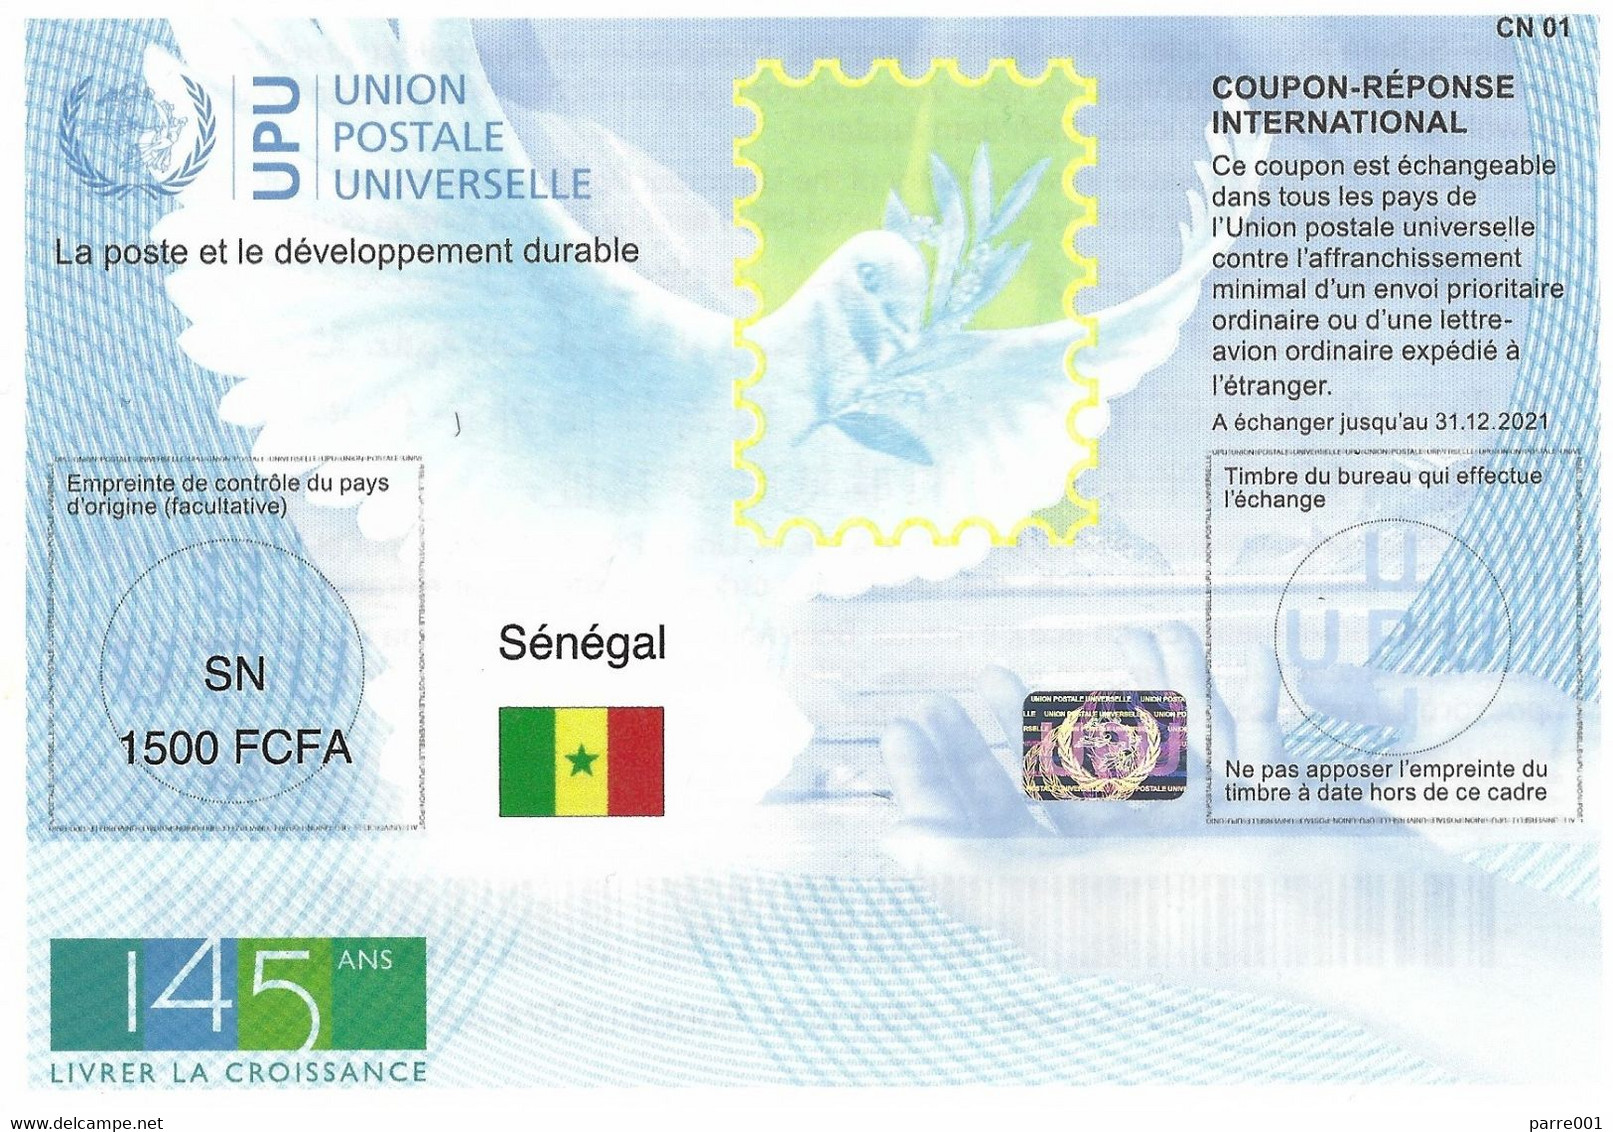 Senegal 2019 Reply Coupon Reponse 145 Ans UPU Hologram Type T37 IRC IAS Antwortschein - UPU (Universal Postal Union)